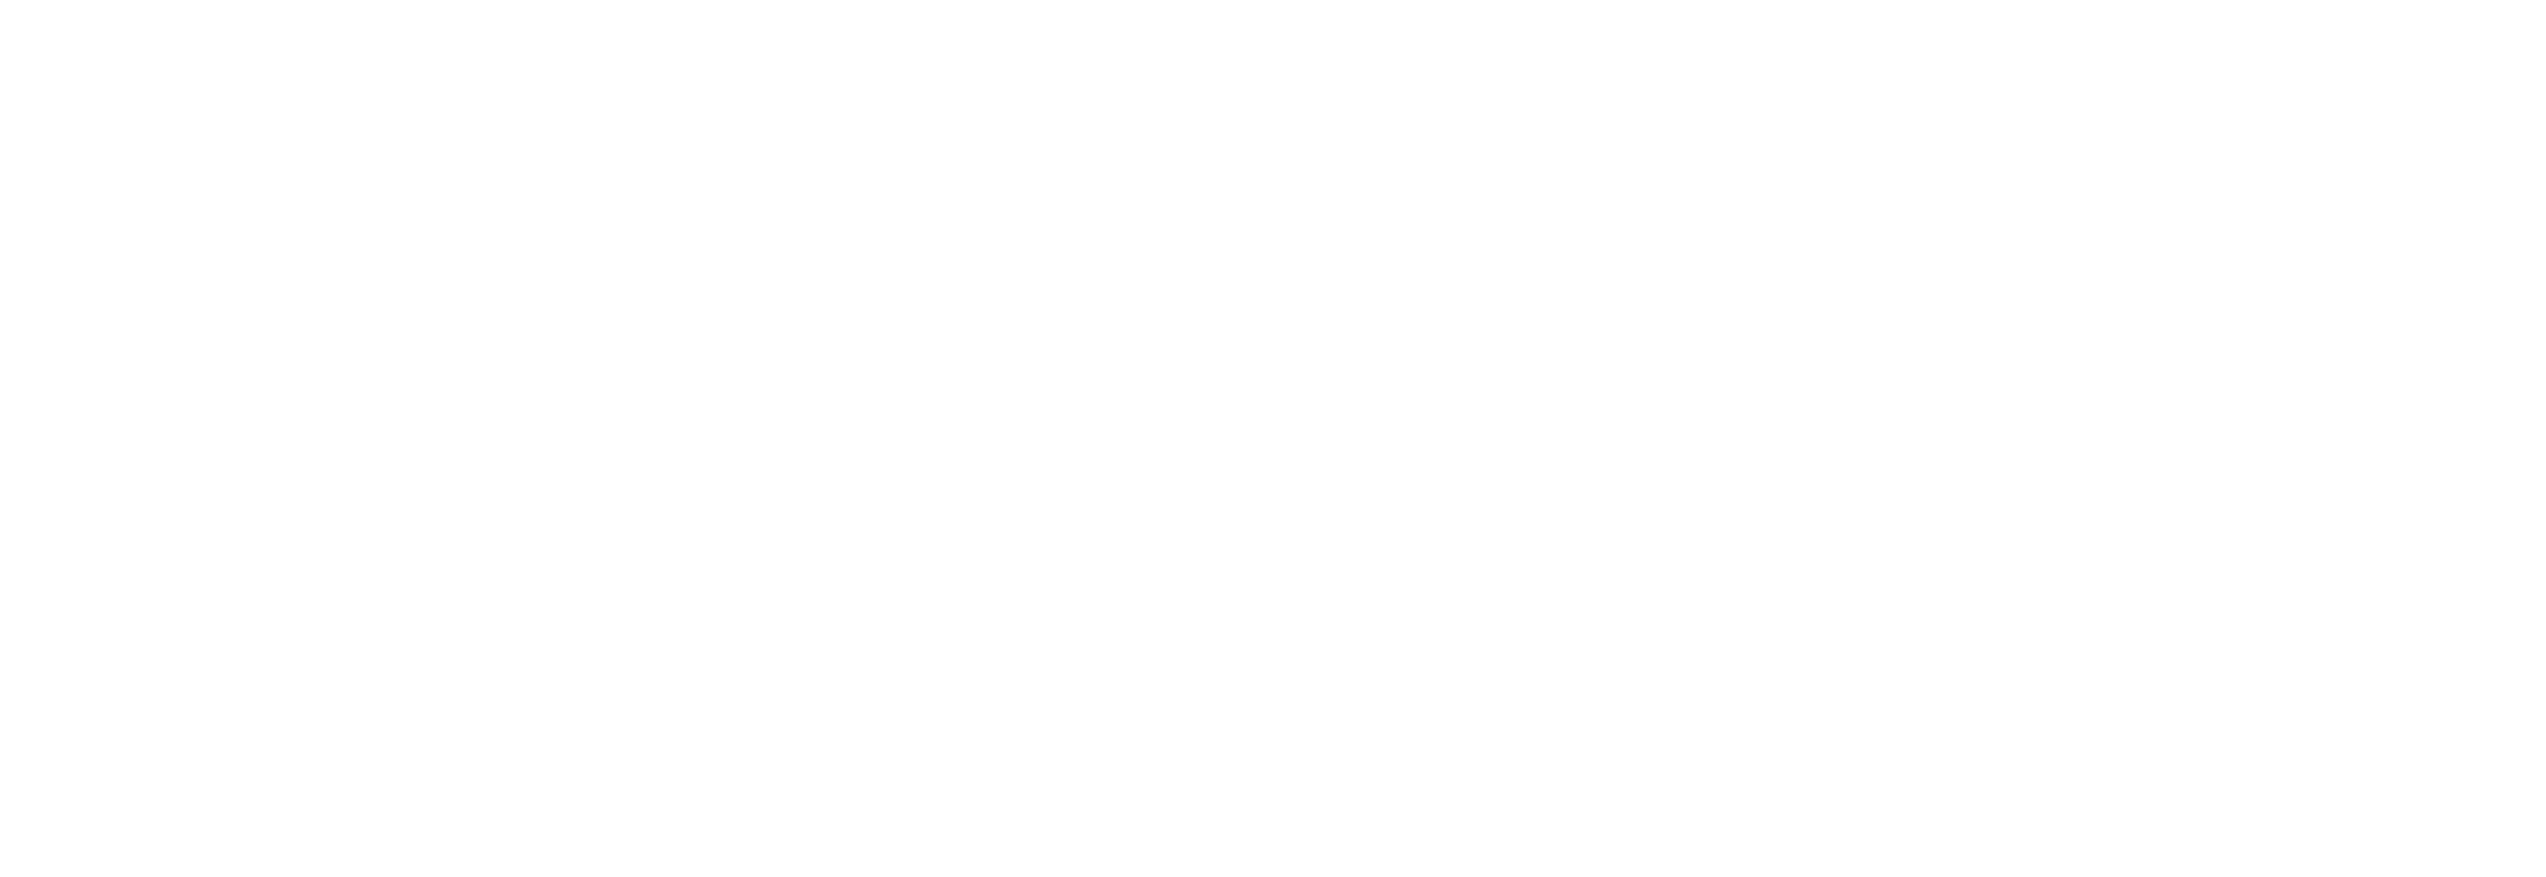 Pinnacle Construction Logo